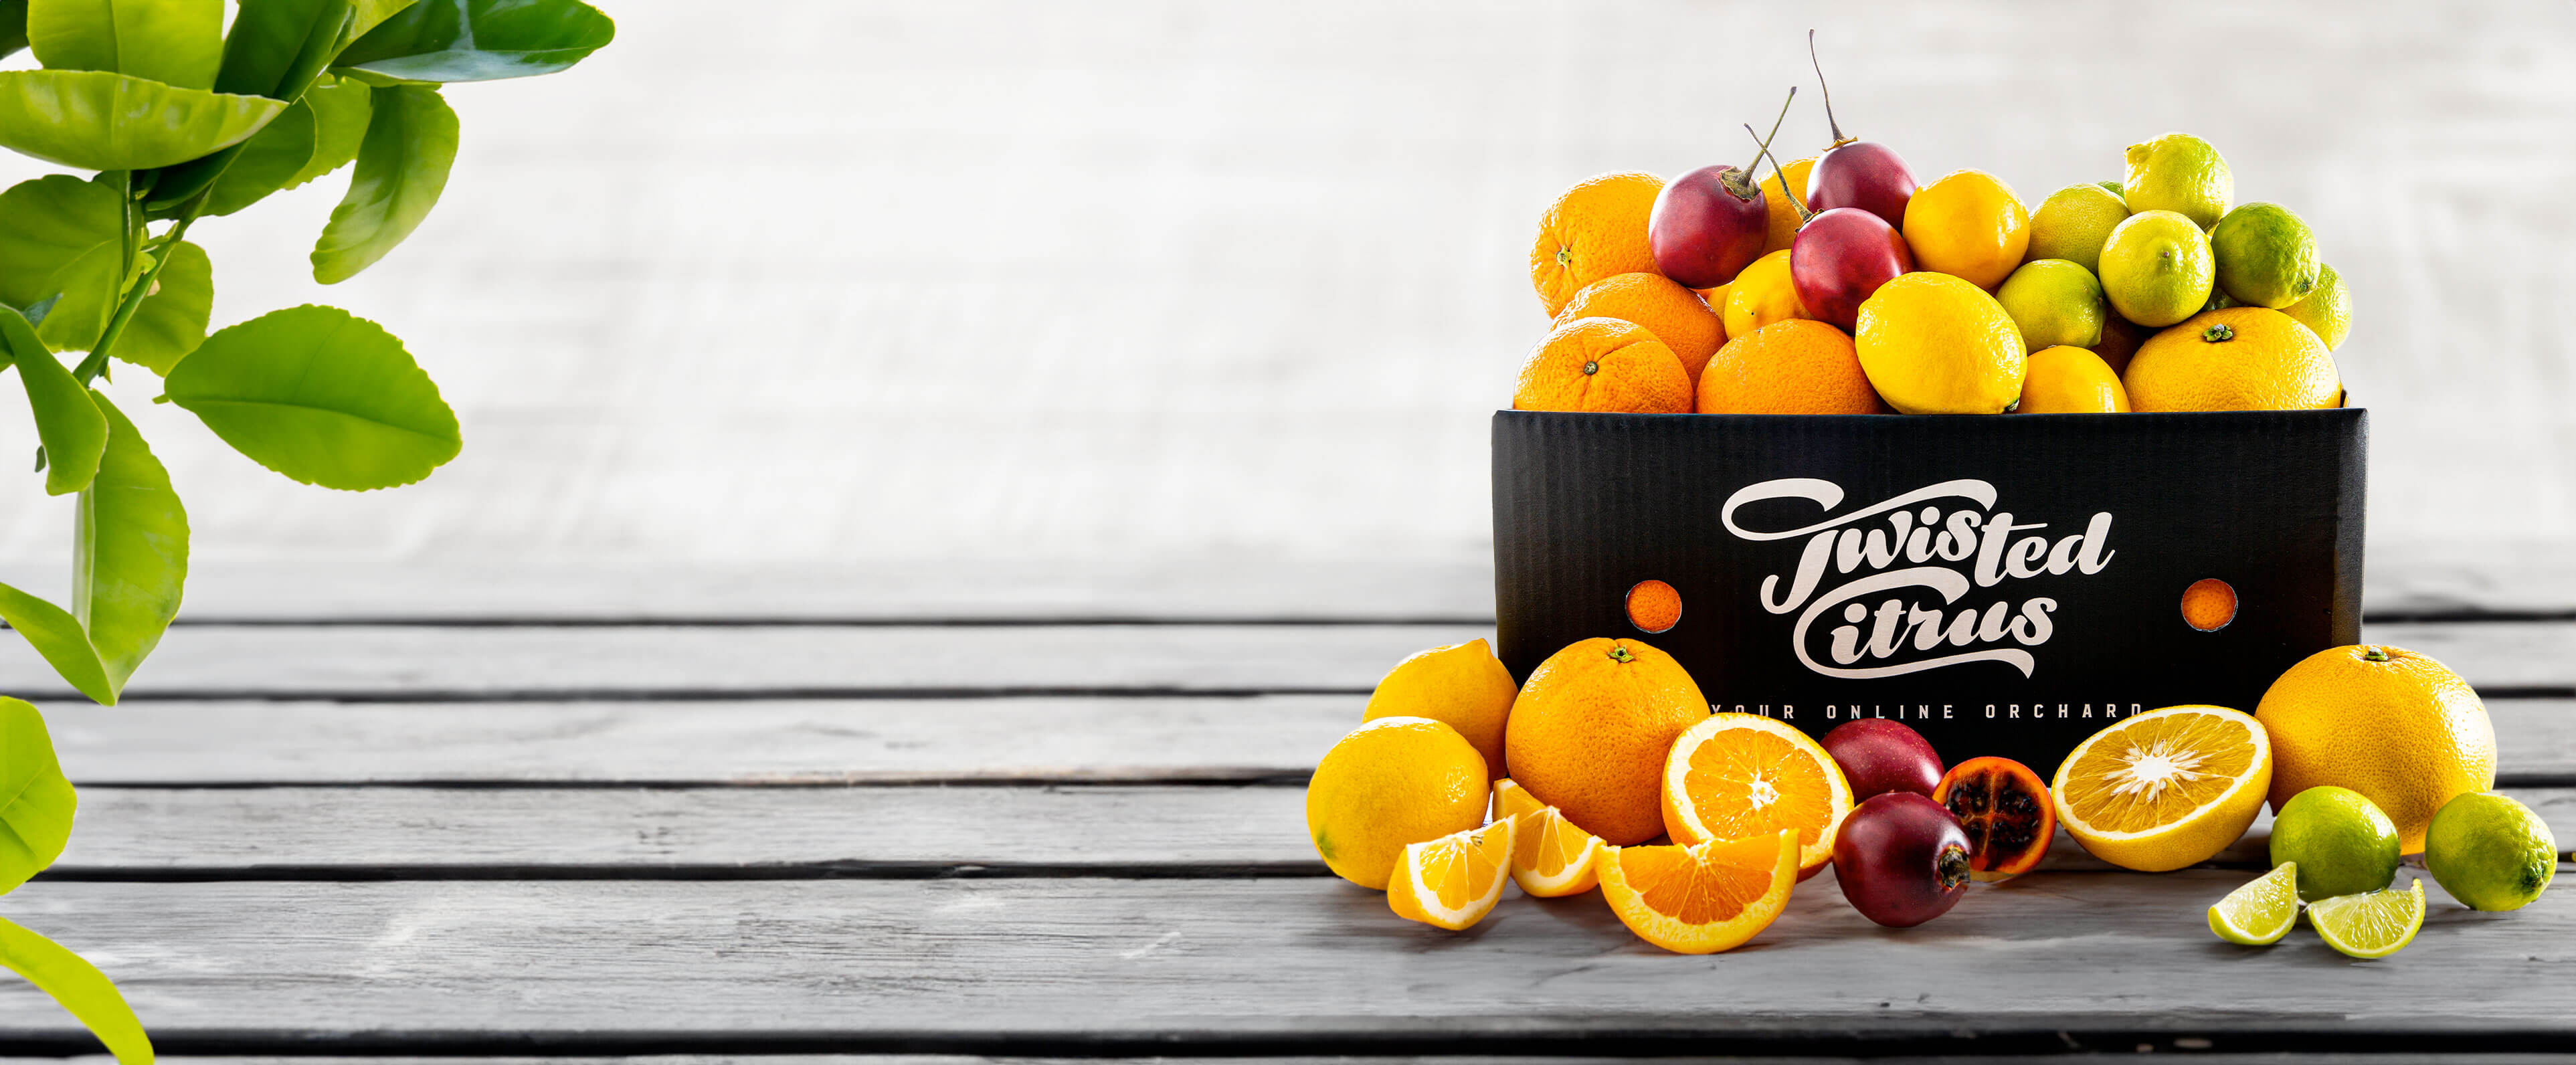 June Seasonal - Buy fresh produce online at Twisted Citrus